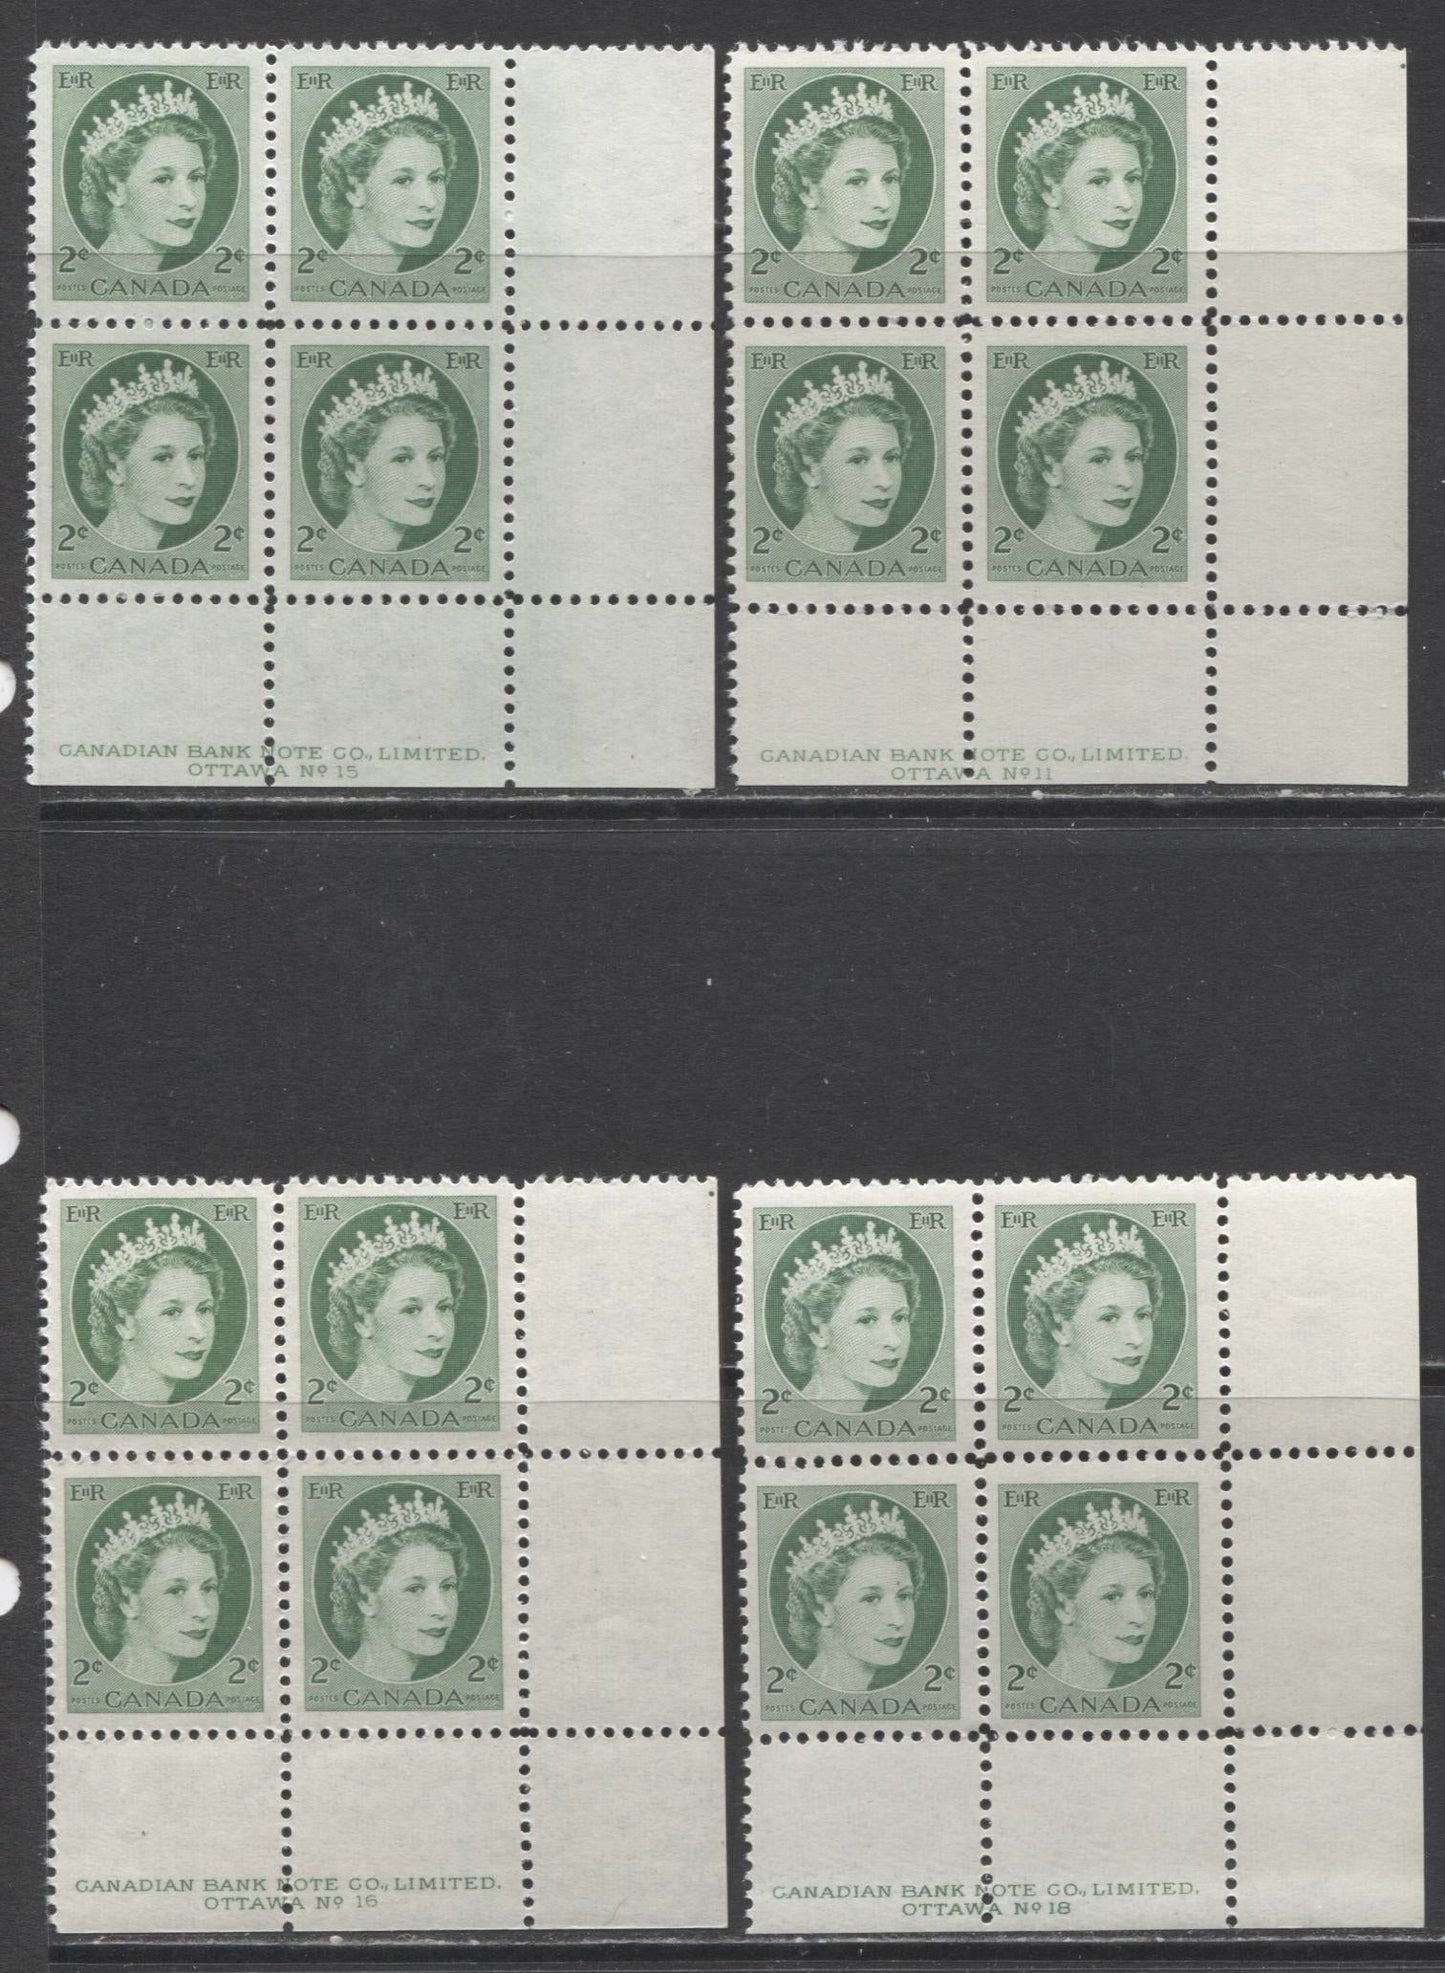 Lot 85 Canada #338 2c Green Queen Elizabeth II, 1954 Wilding Issue, 4 Fine and VFNH LR Plates 11, 15-16 & 18 Blocks Of 4